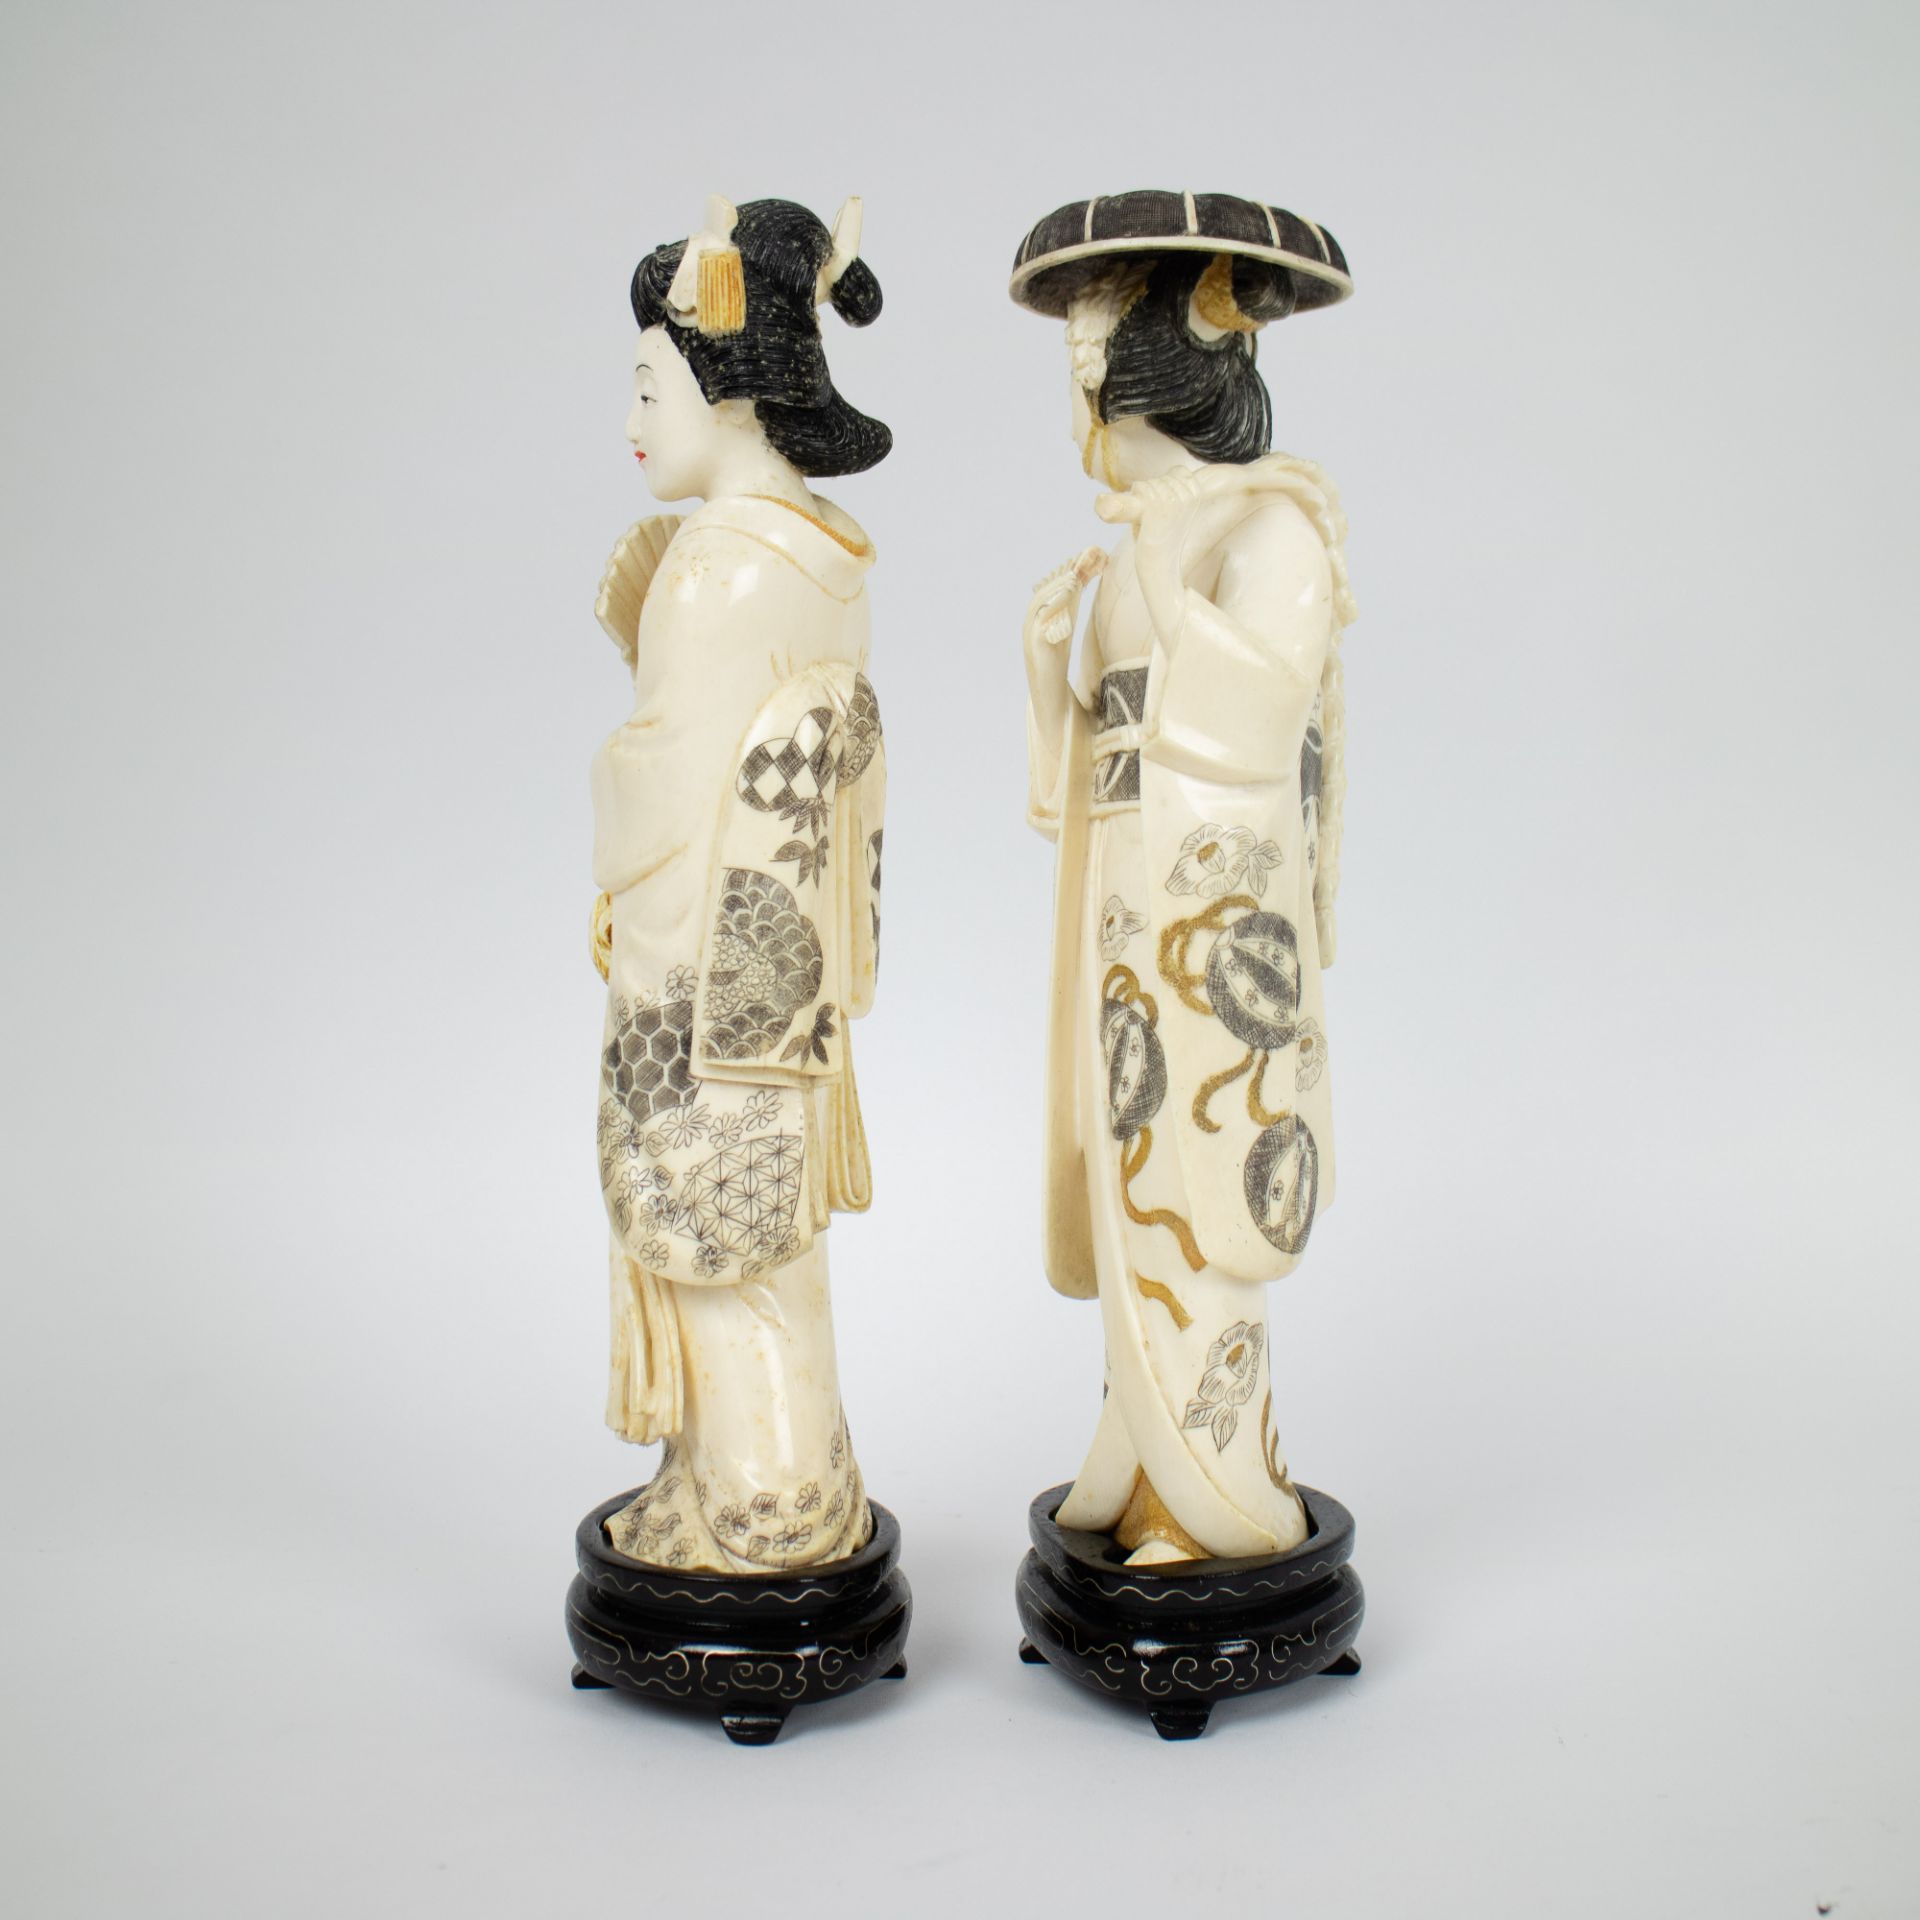 2 Geishas in ivory, Okimono Japan period Meiji 1868-1912 - Image 4 of 4